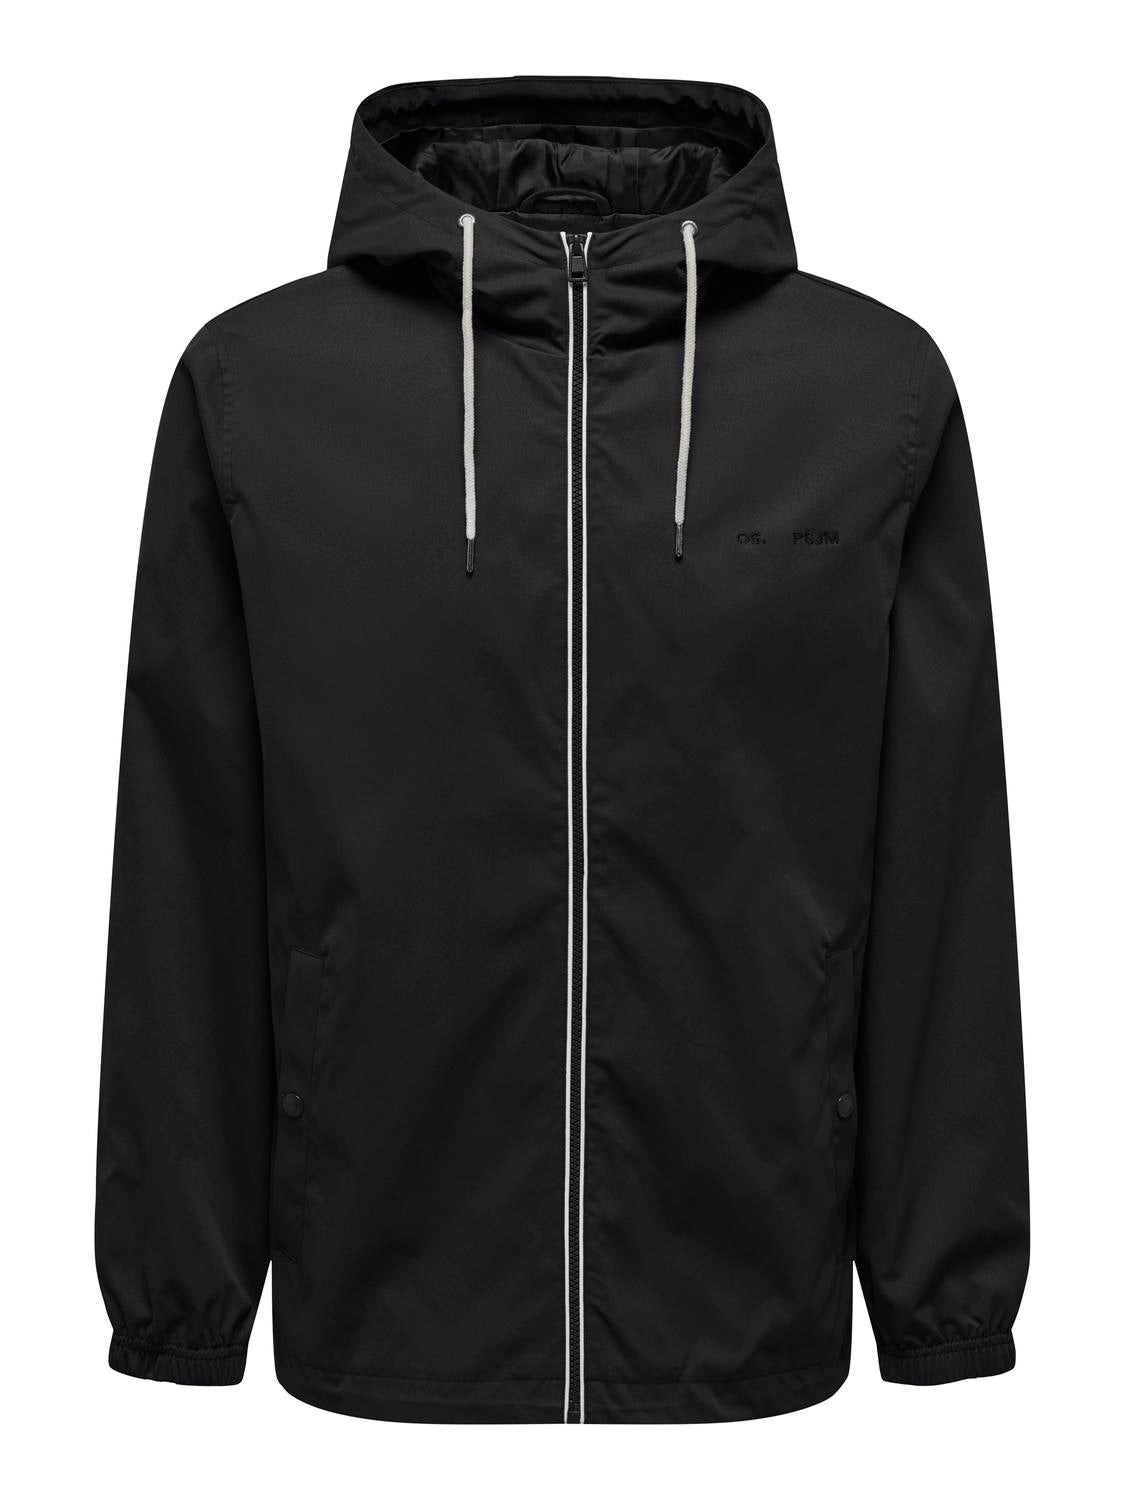 Hood with string regulation Jacket | Black | ONLY & SONS®